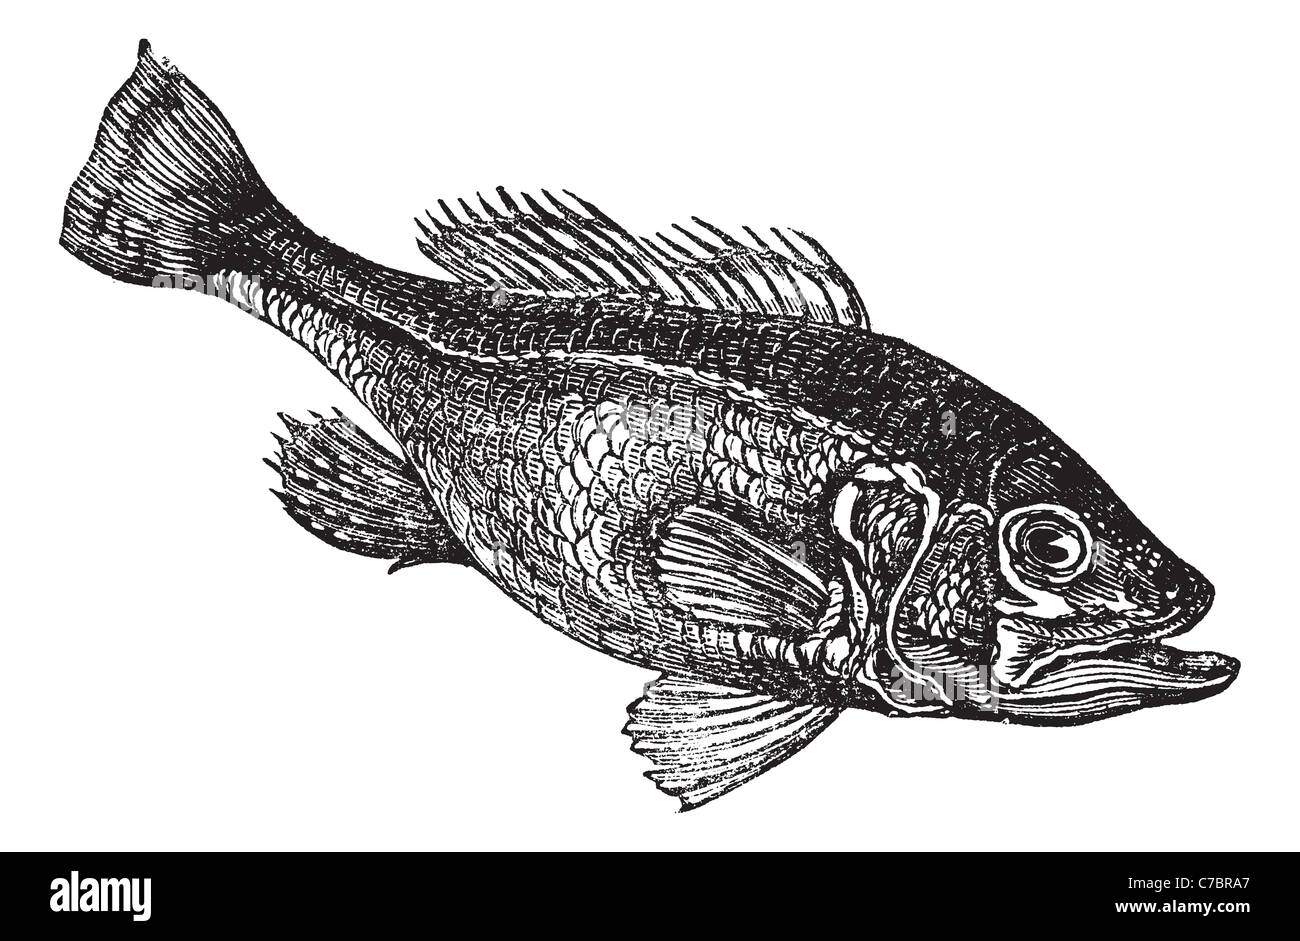 Largemouth bass (Micropterus salmoides) vintage engraving. Old engraved illustration of freshwater largemouth bass fish. Stock Photo